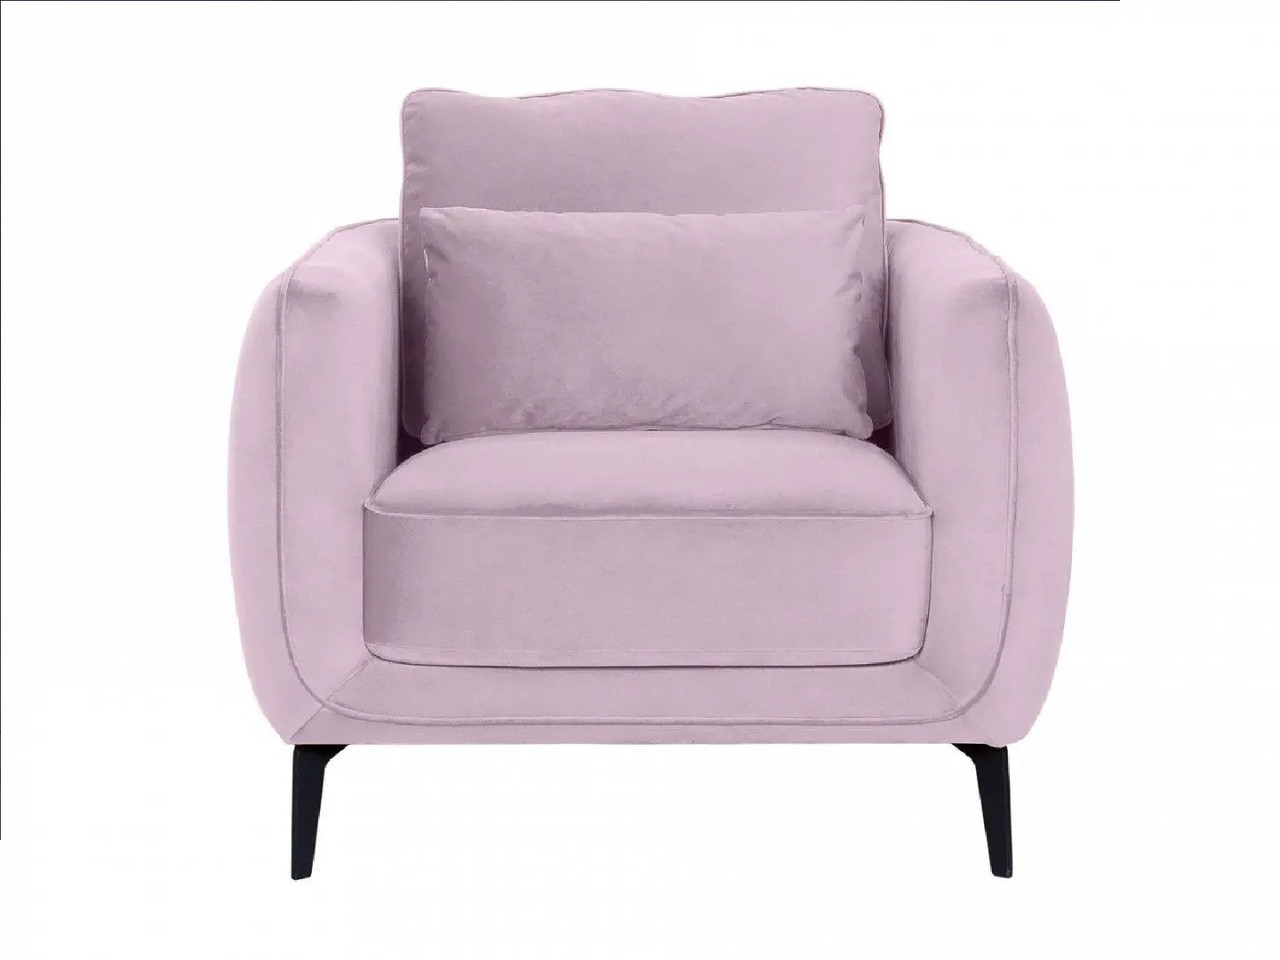 Hoffmann классическое кресло, обивка вельвет Amsterdam pink